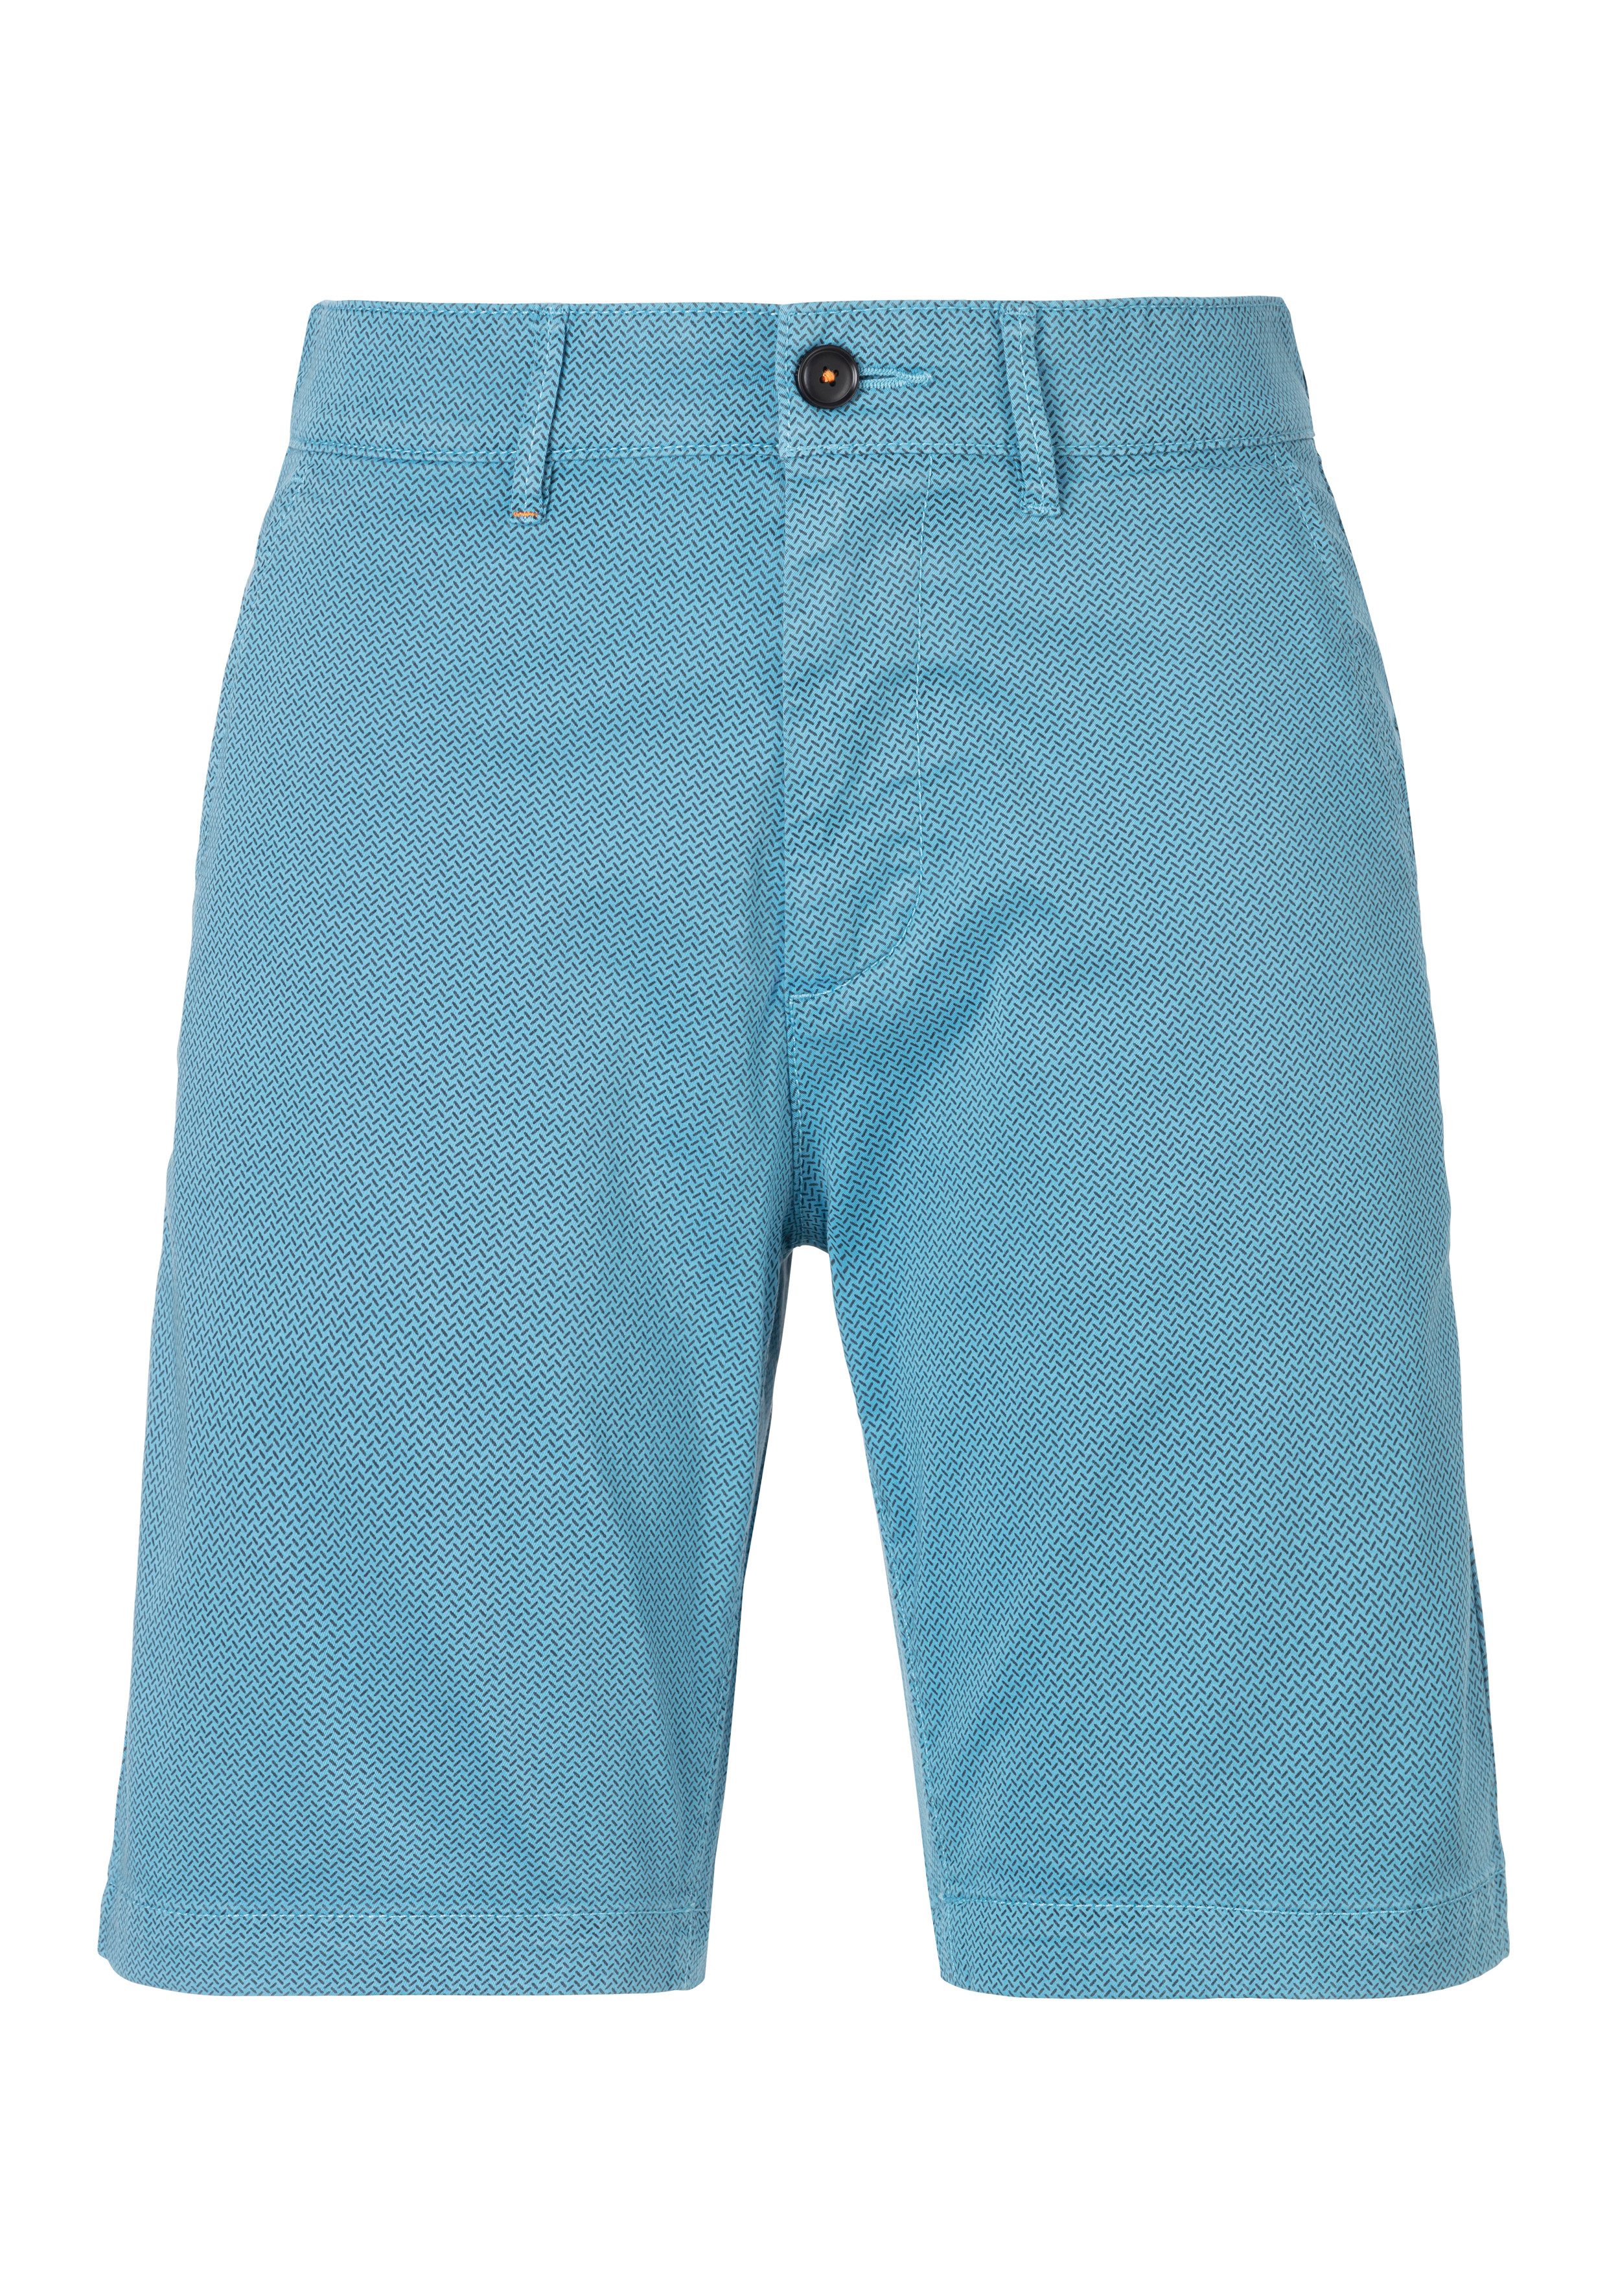 BOSS ORANGE Chinohose Chino-slim-Shorts mit Kontrastdetails